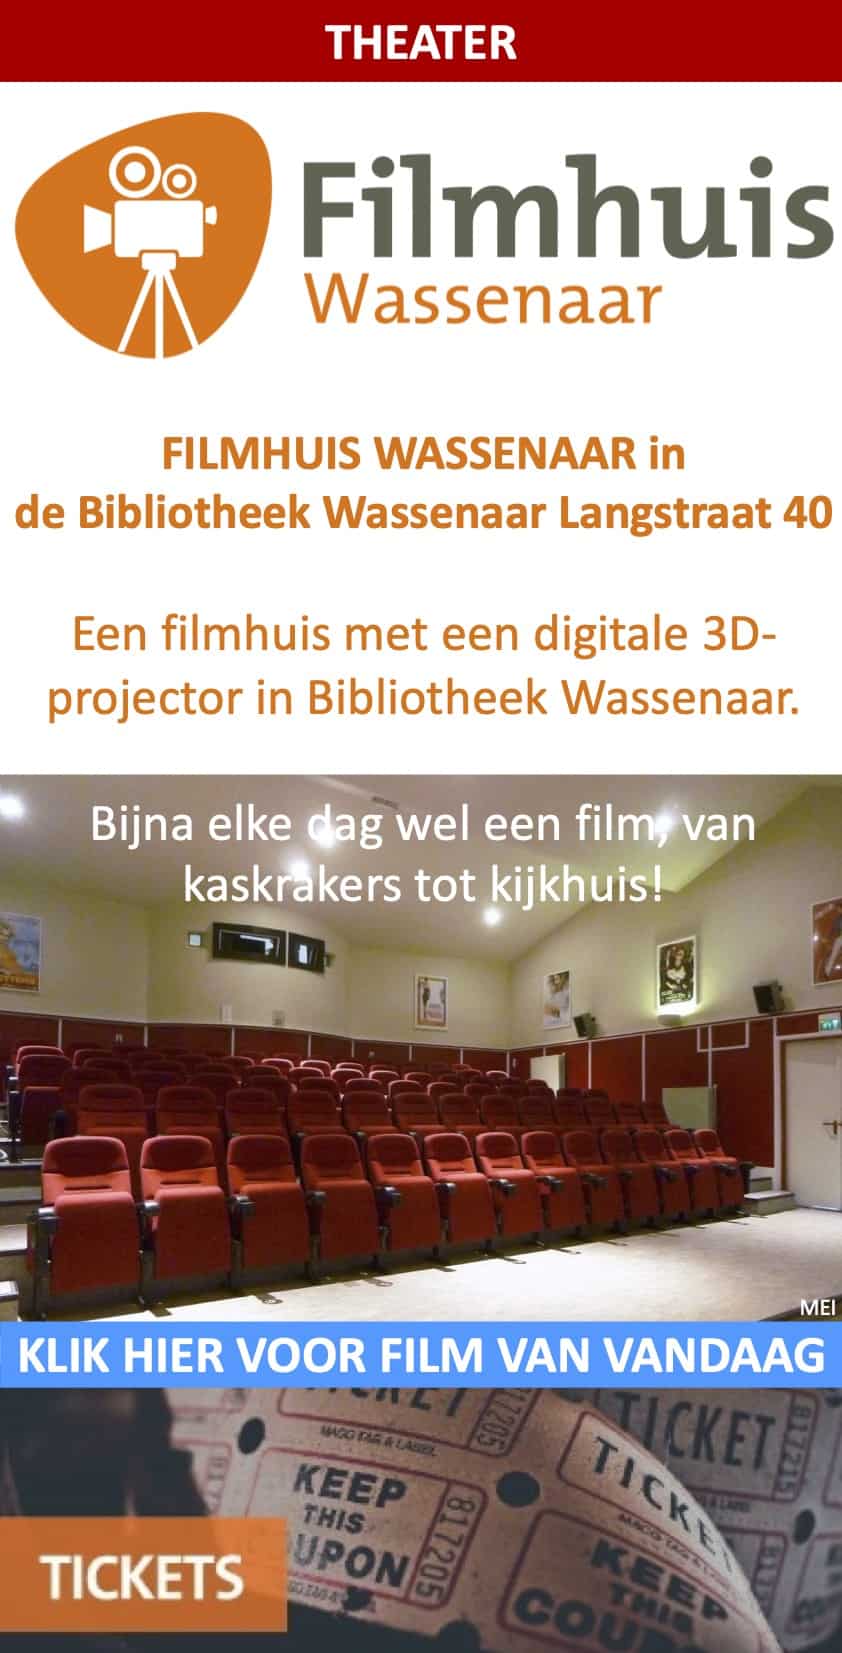 Filmhuis Wassenaar in de Bibliotheek Langstraat 40 mei